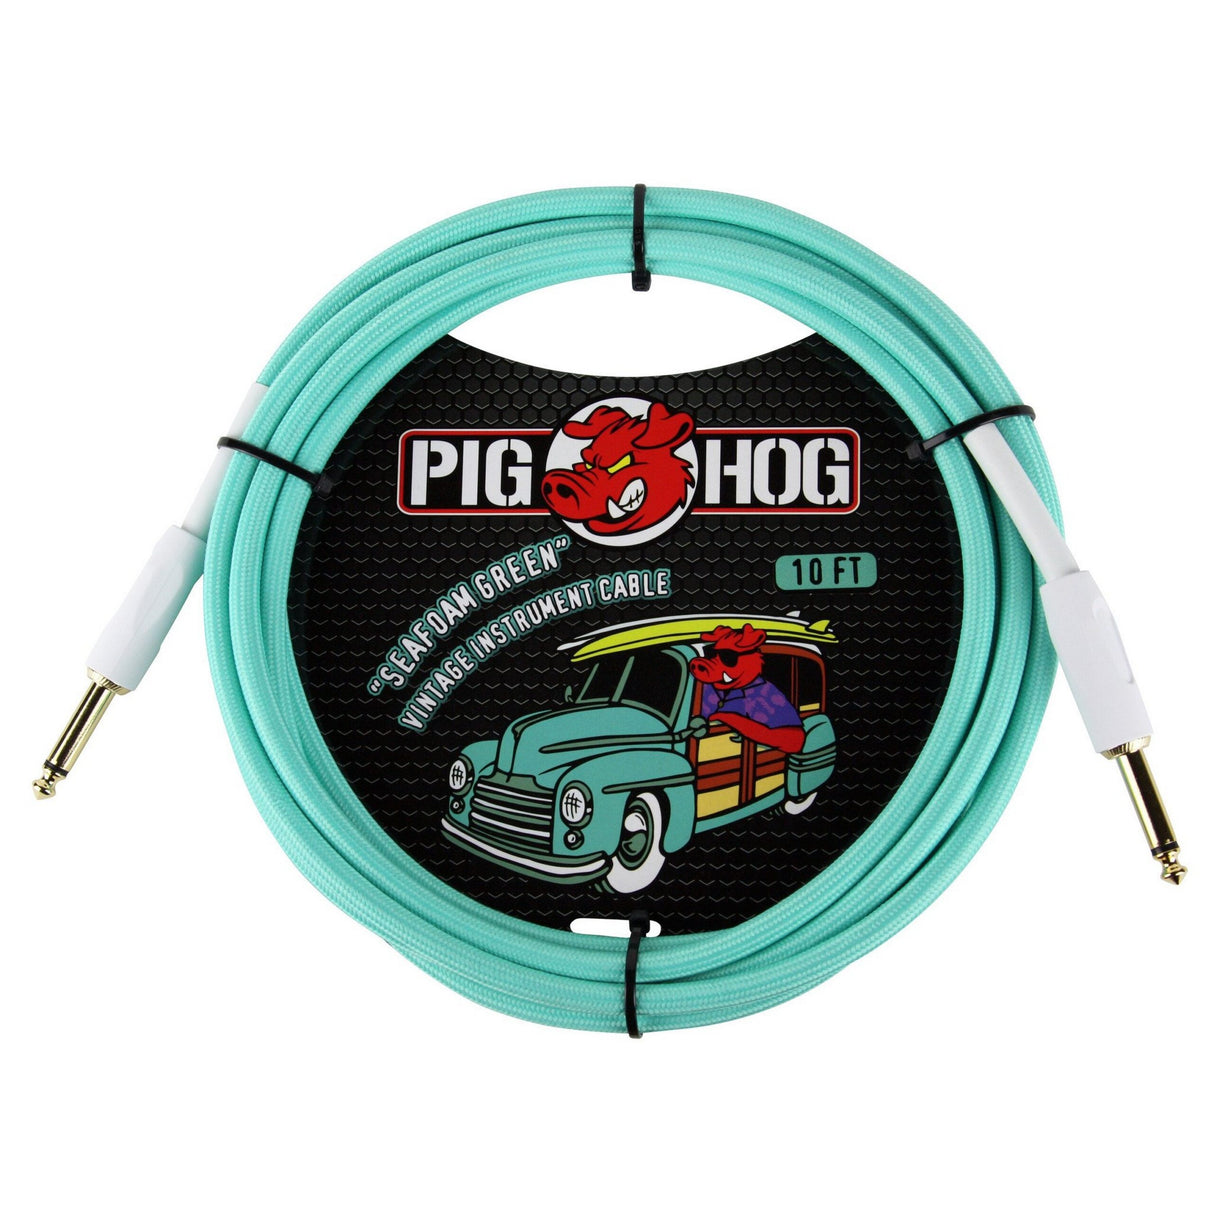 Pig Hog PCH10SG "Seafoam Green" Instrument Cable, 10ft.